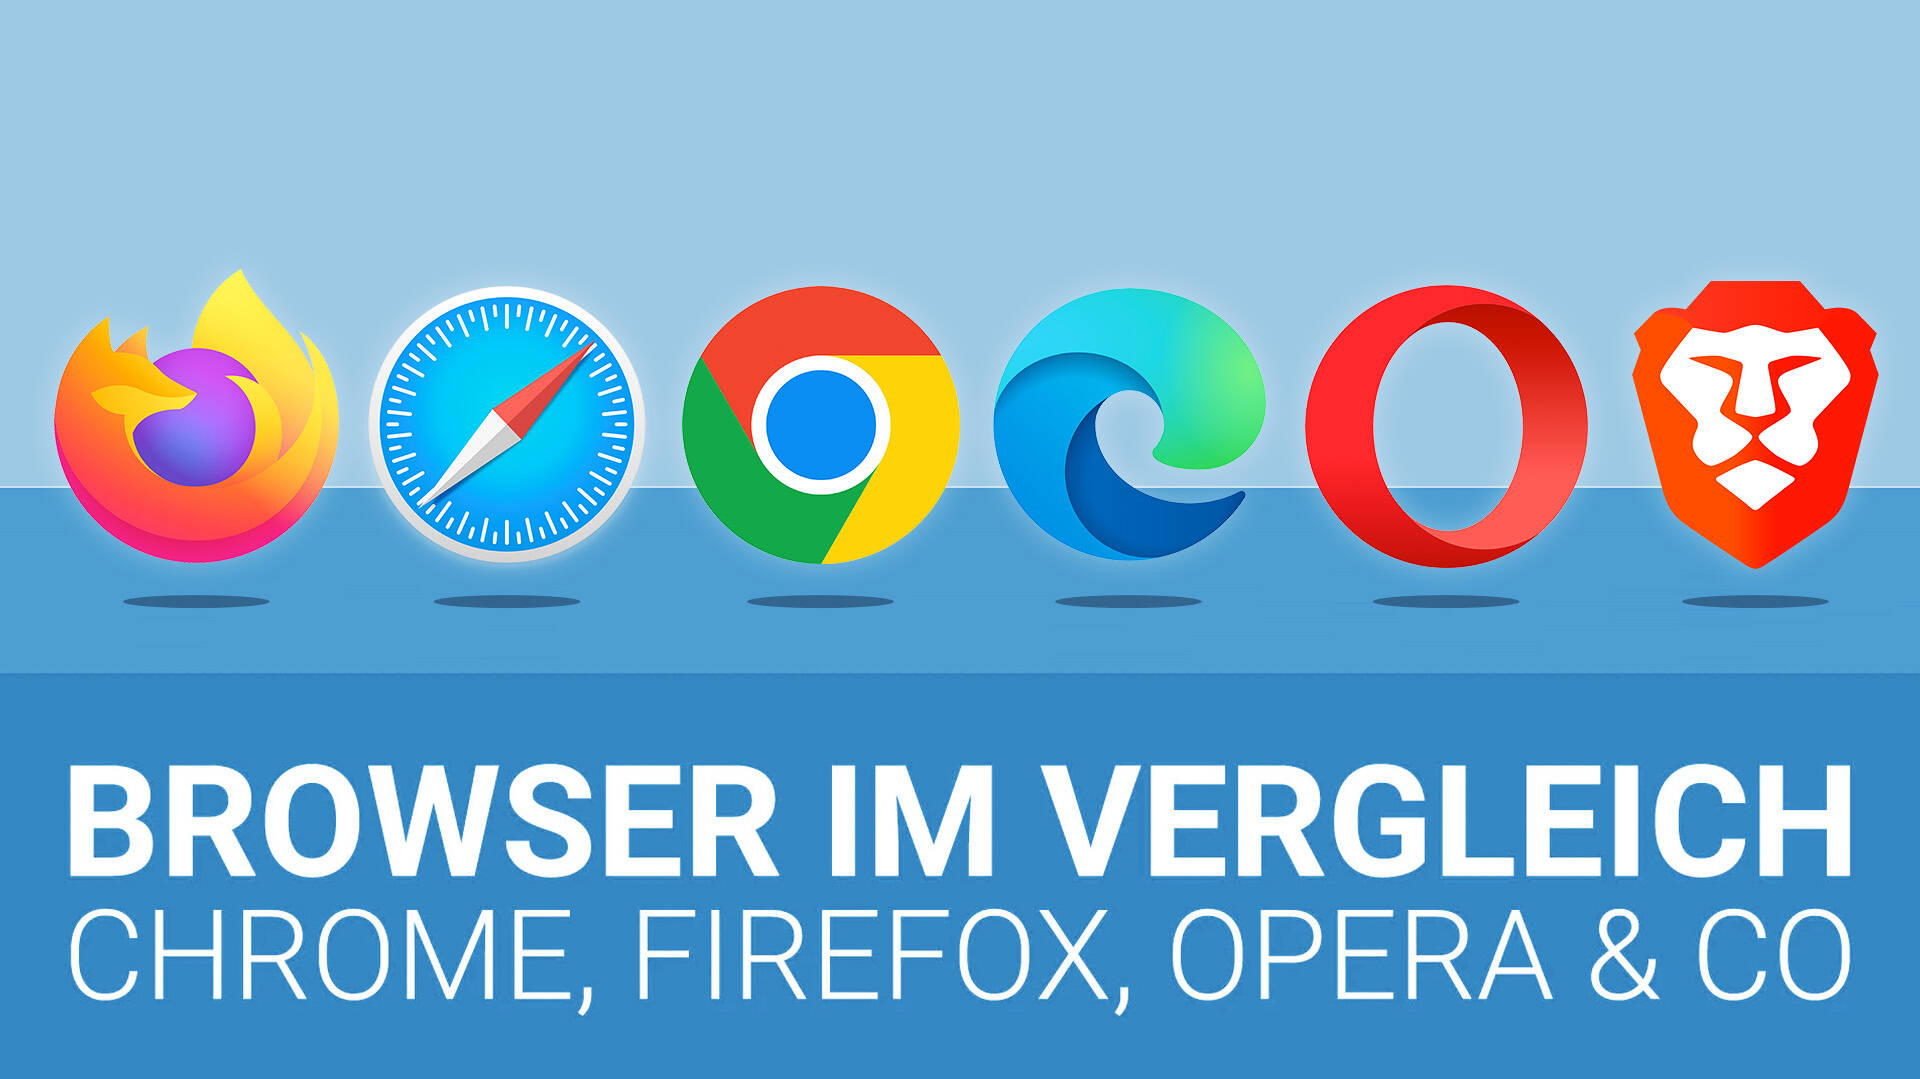 Chrome, Firefox, Opera & Co: Browser im Vergleich